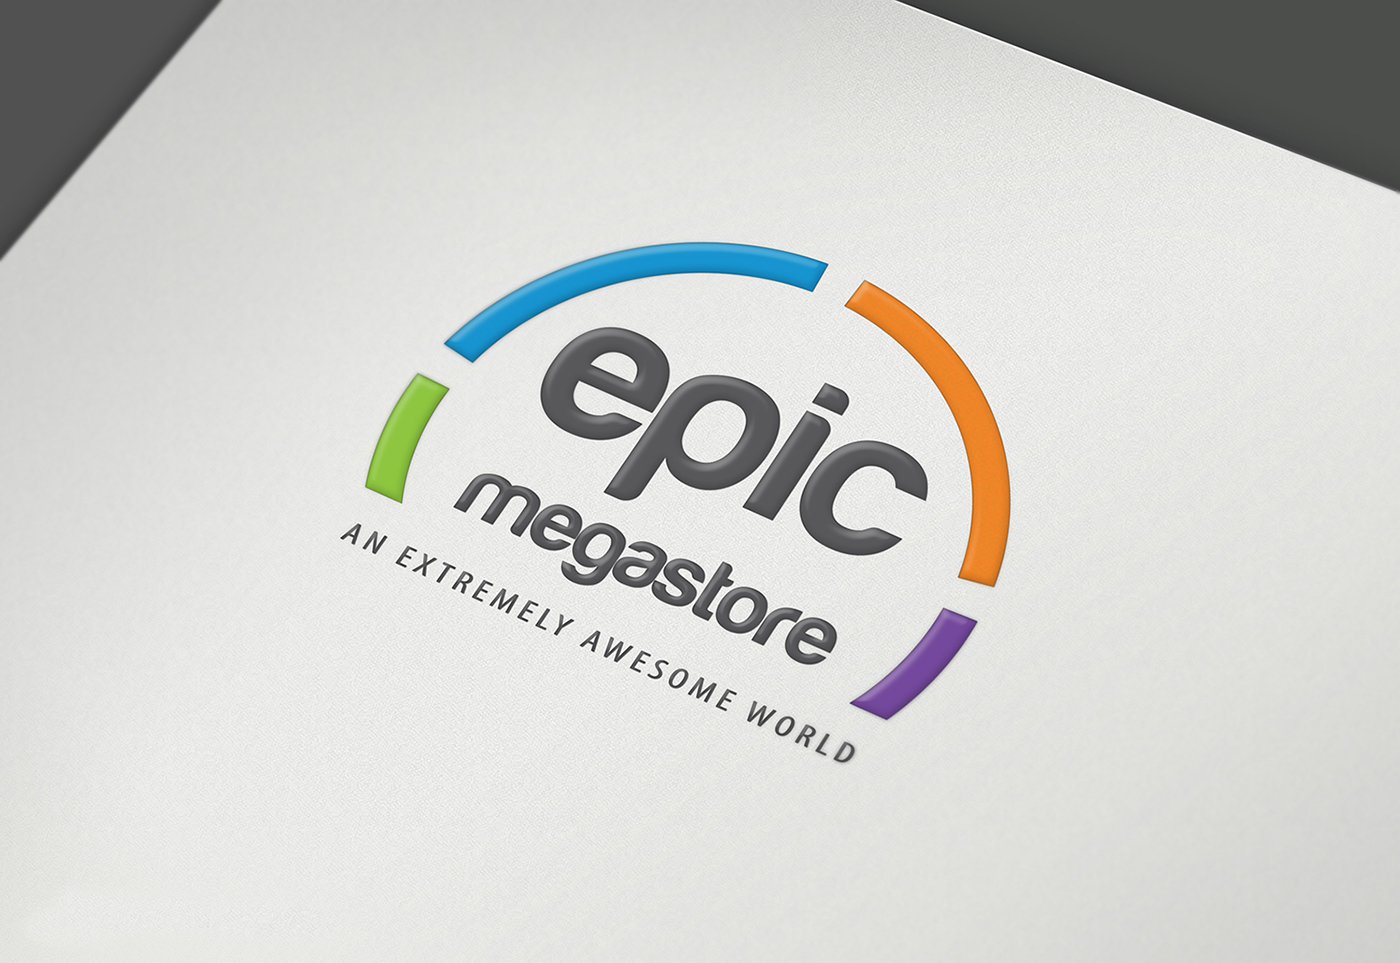 epic megastores virgin books Technology globe stores world logo logodesign identity presentation design colors